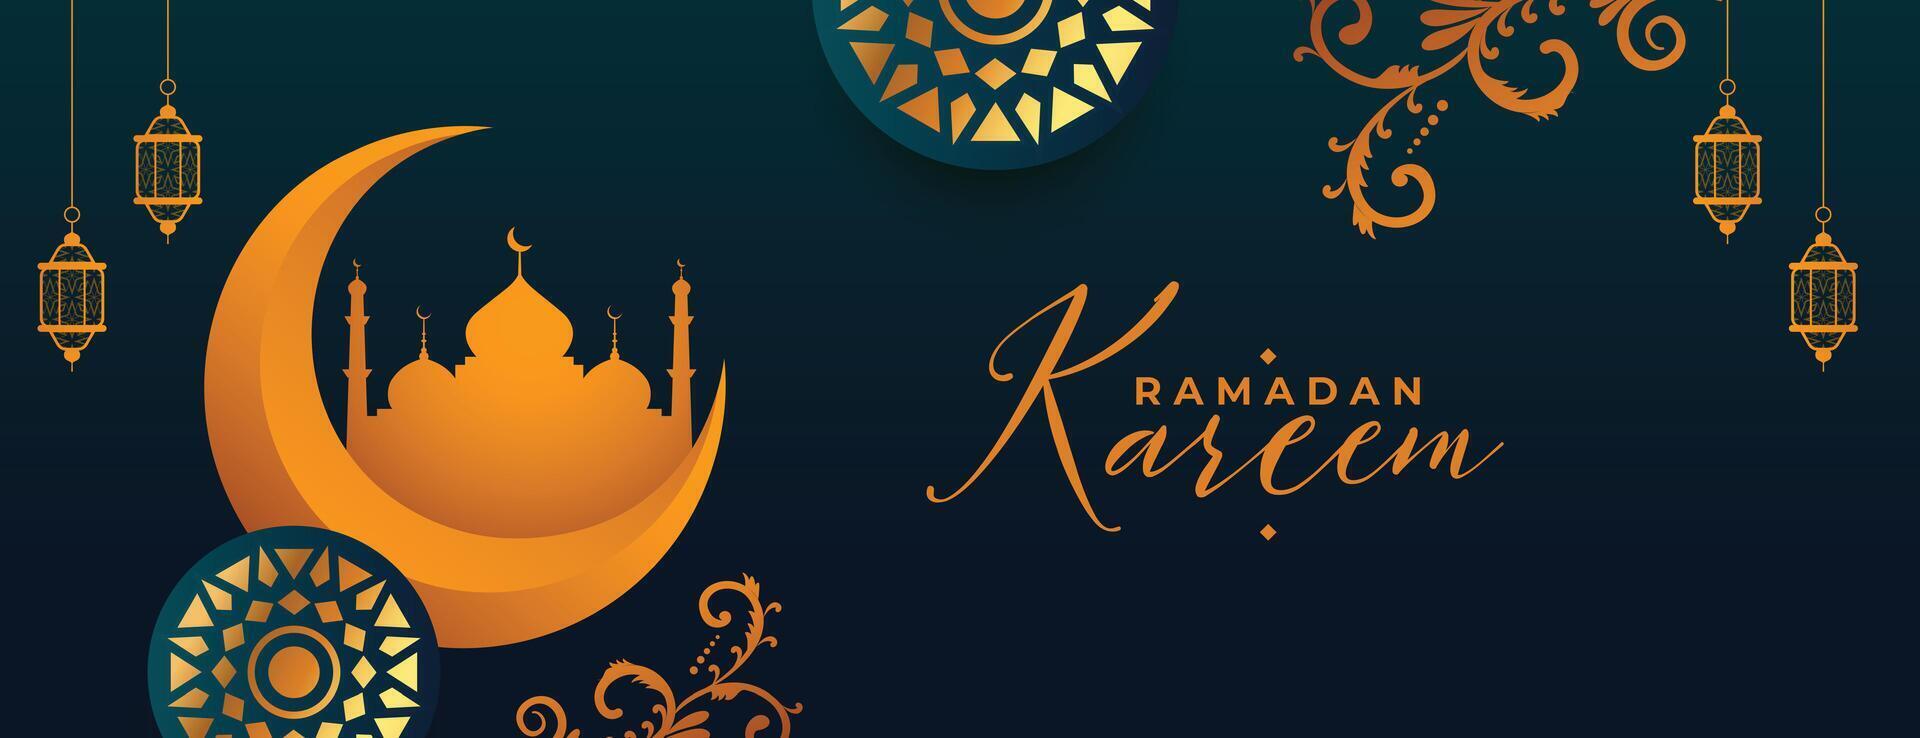 islamico Ramadan kareem decorativo bandiera per eid Festival vettore